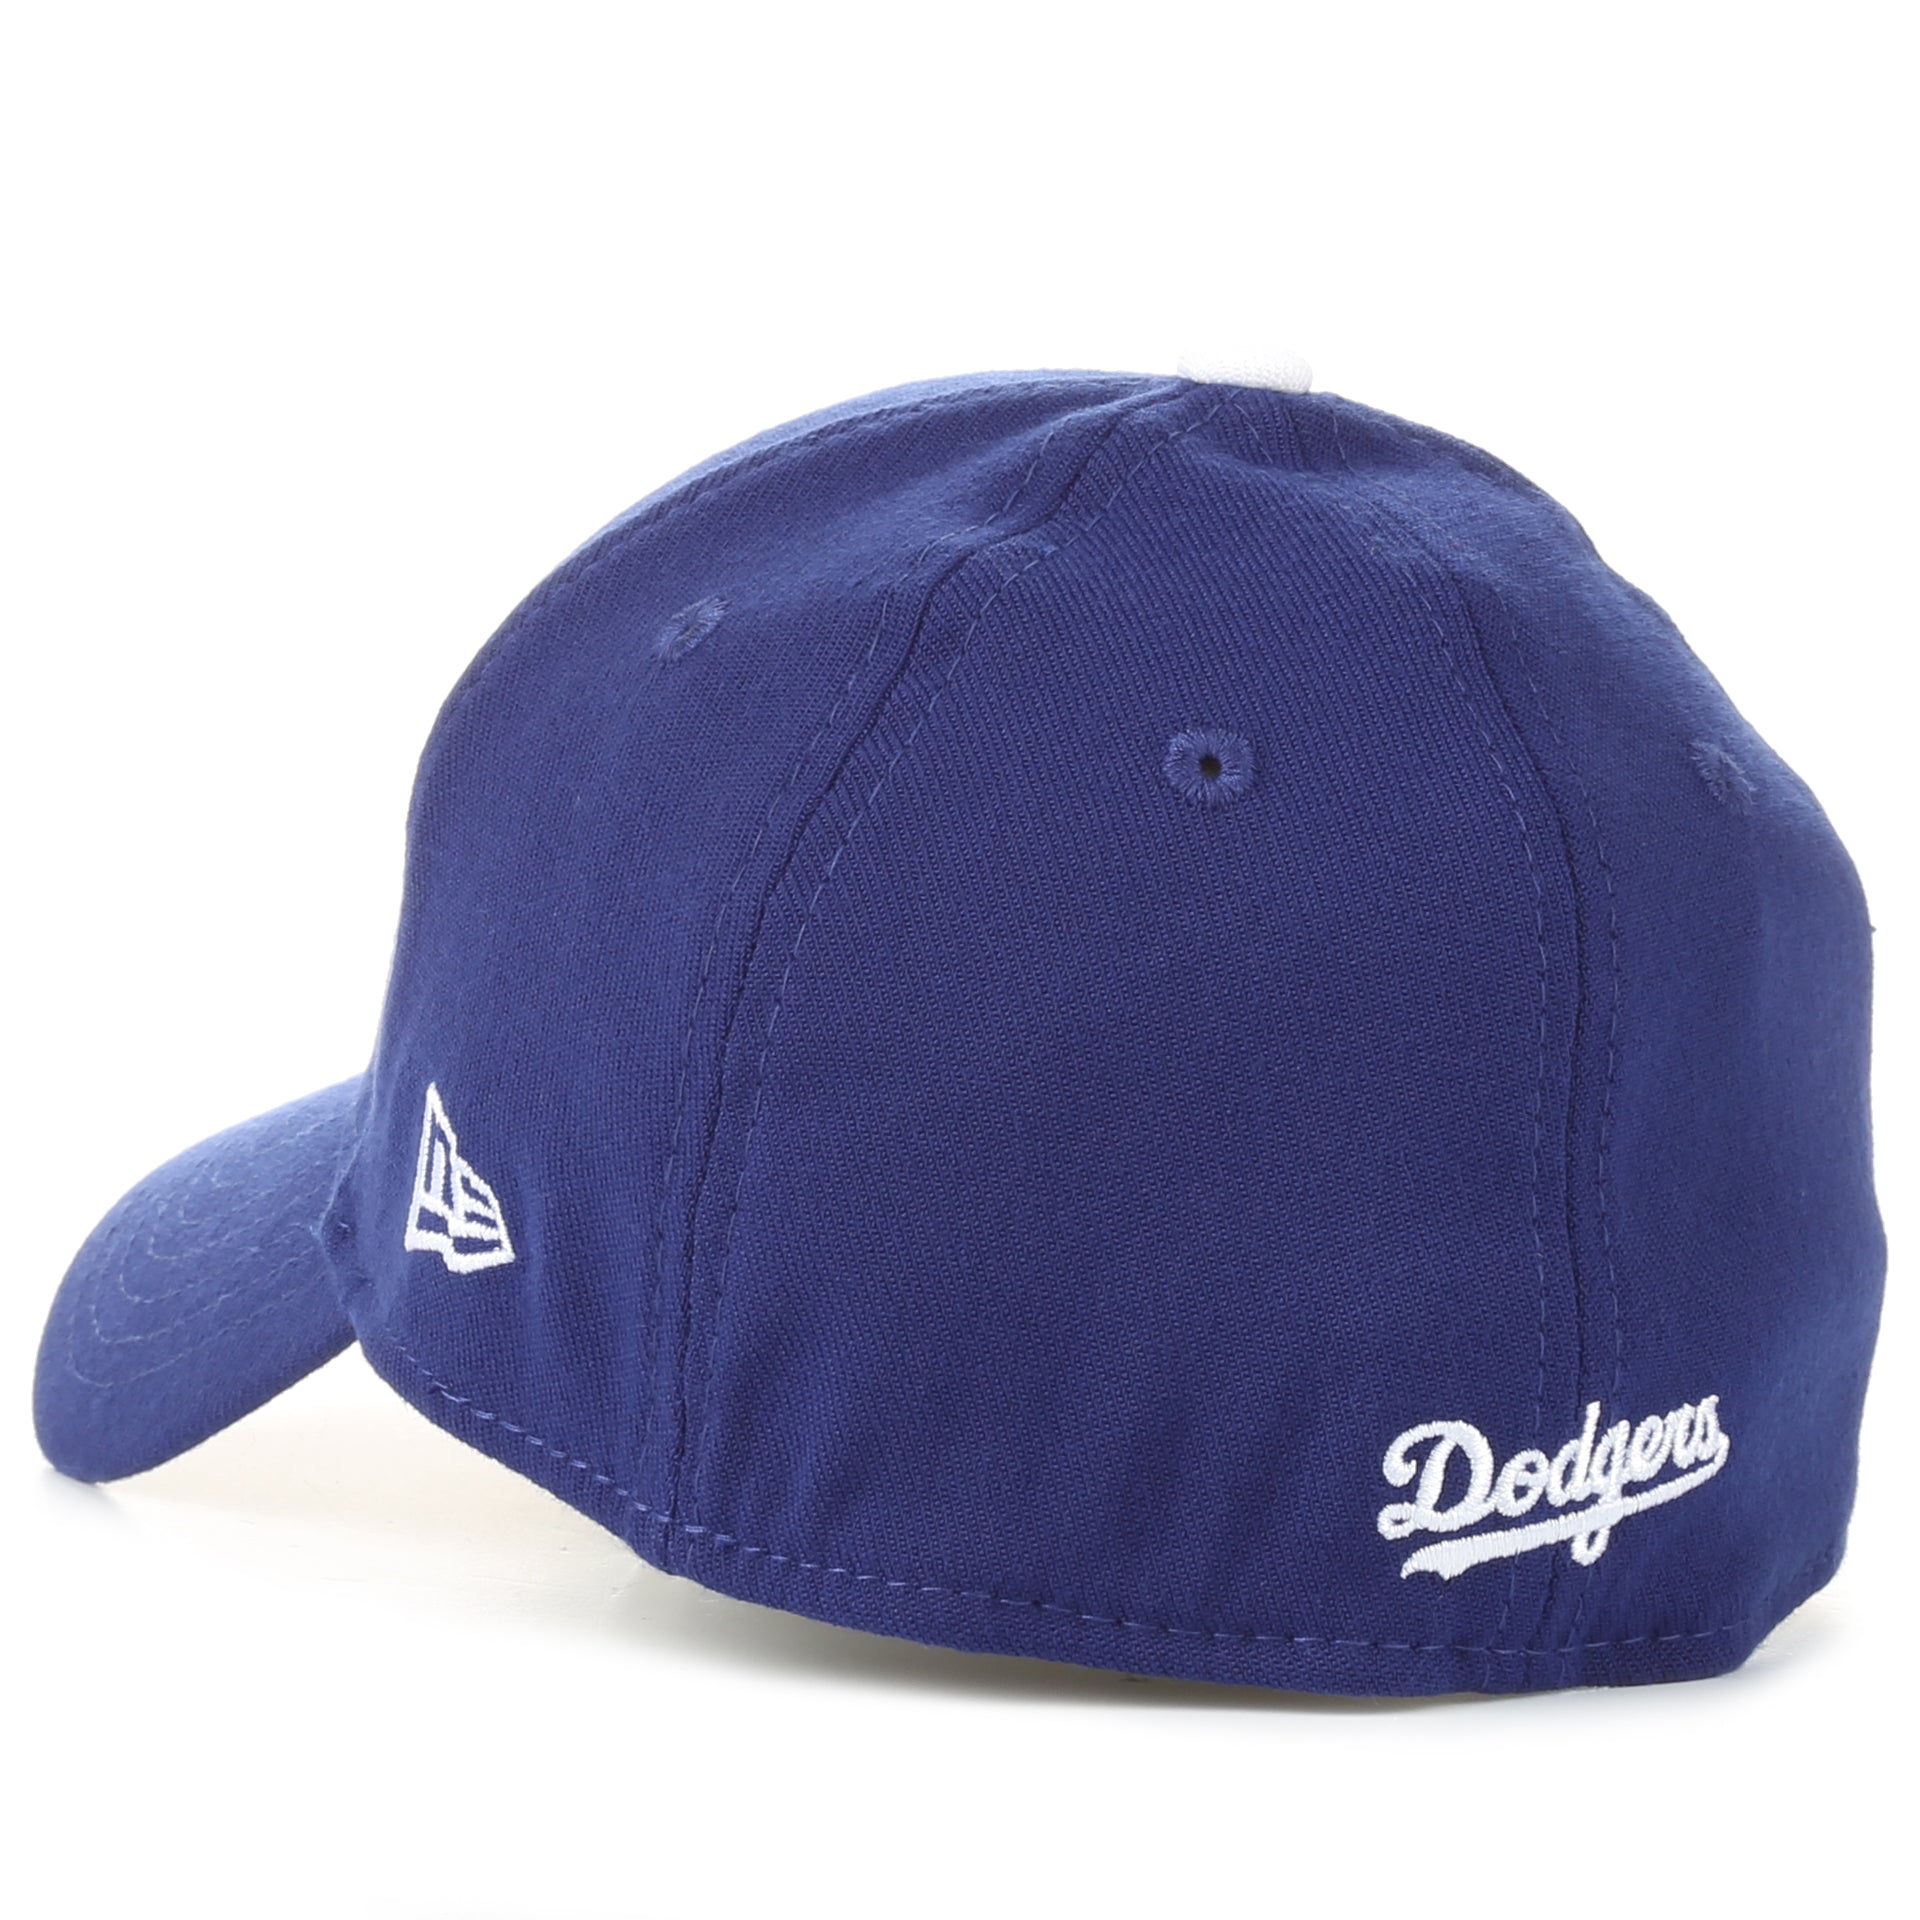 los dodgers hat